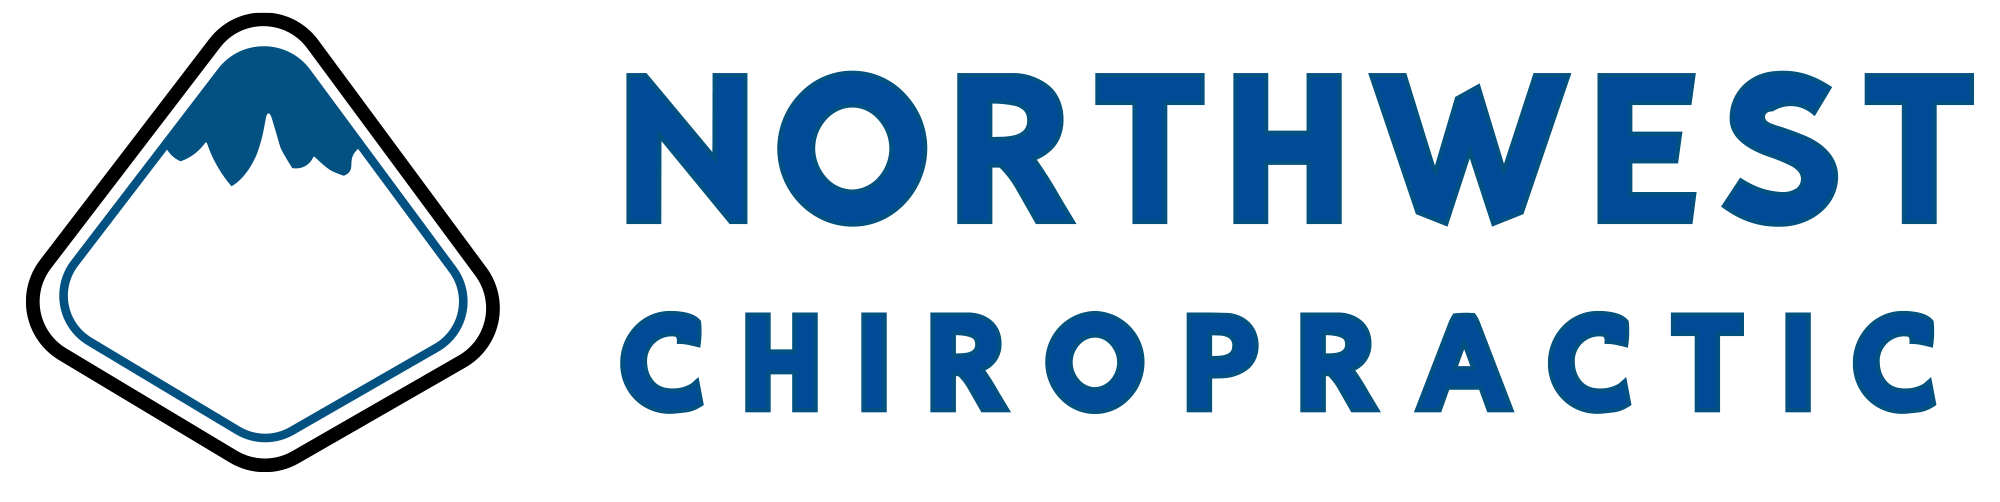 Chiropractic Olympia WA Northwest Chiropractic